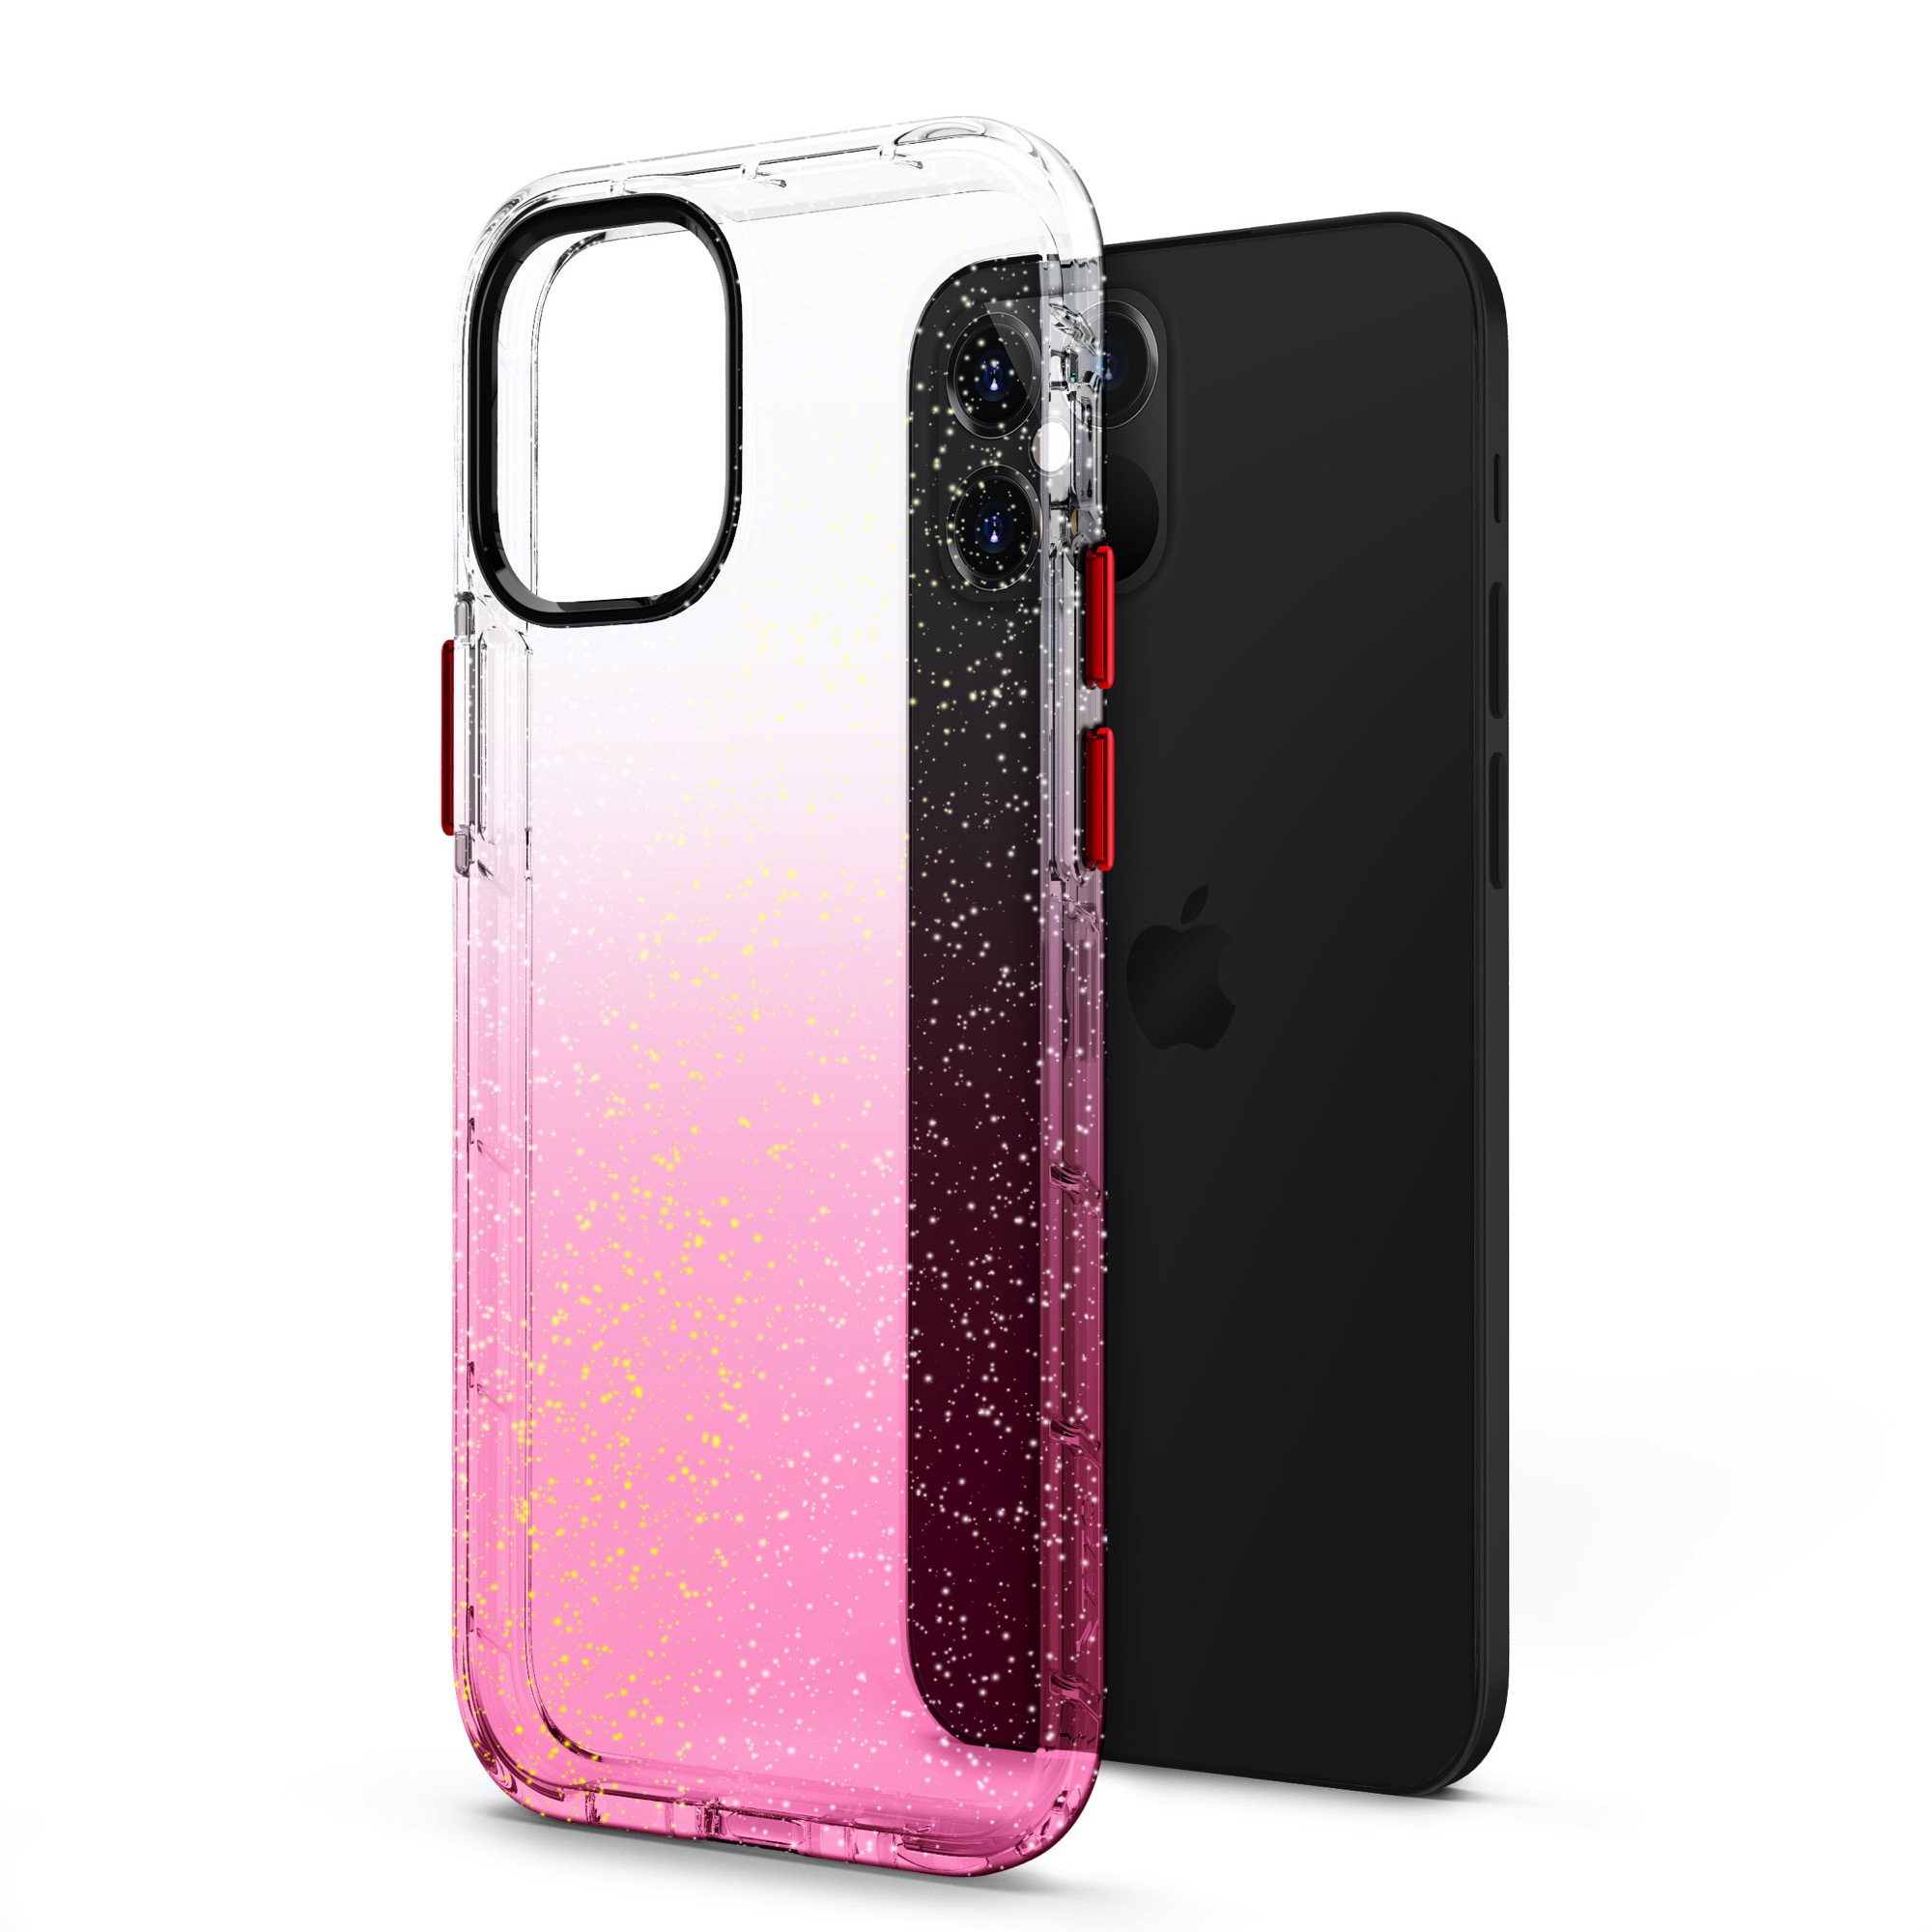 iPhone 12 Max / Pro 6.1 ZIZO Surge Series Case – Pink Glitter (110106)